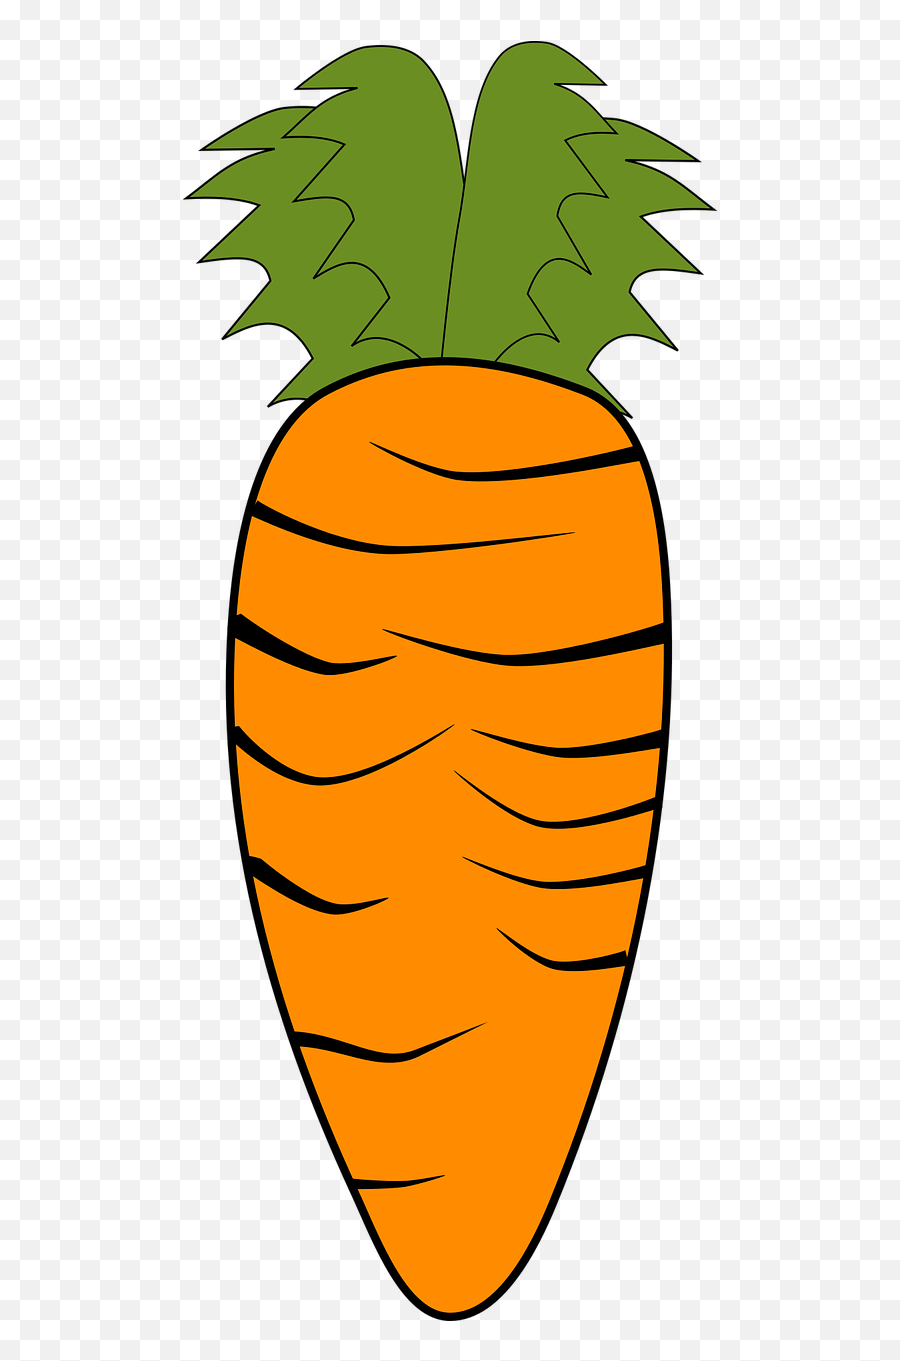 Download Free Photo Of Carrotvegetablesorangefoodhealthy Emoji,Eat Healthy Clipart